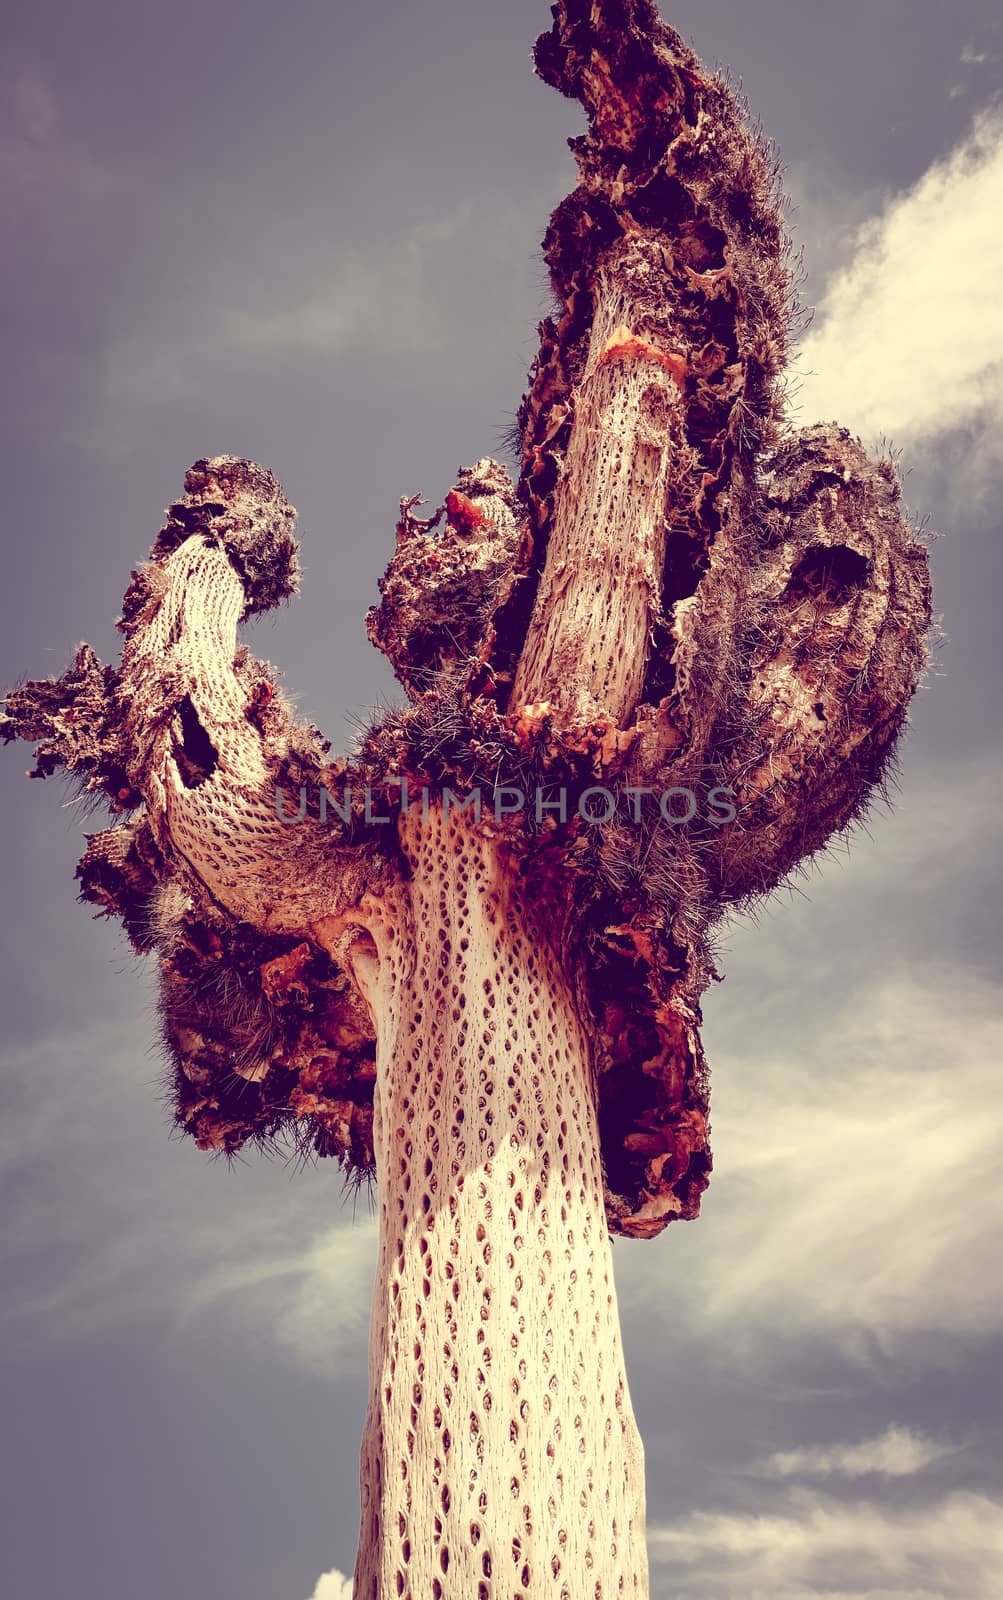 dry giant cactus detail in the Tilcara quebrada, Argentina